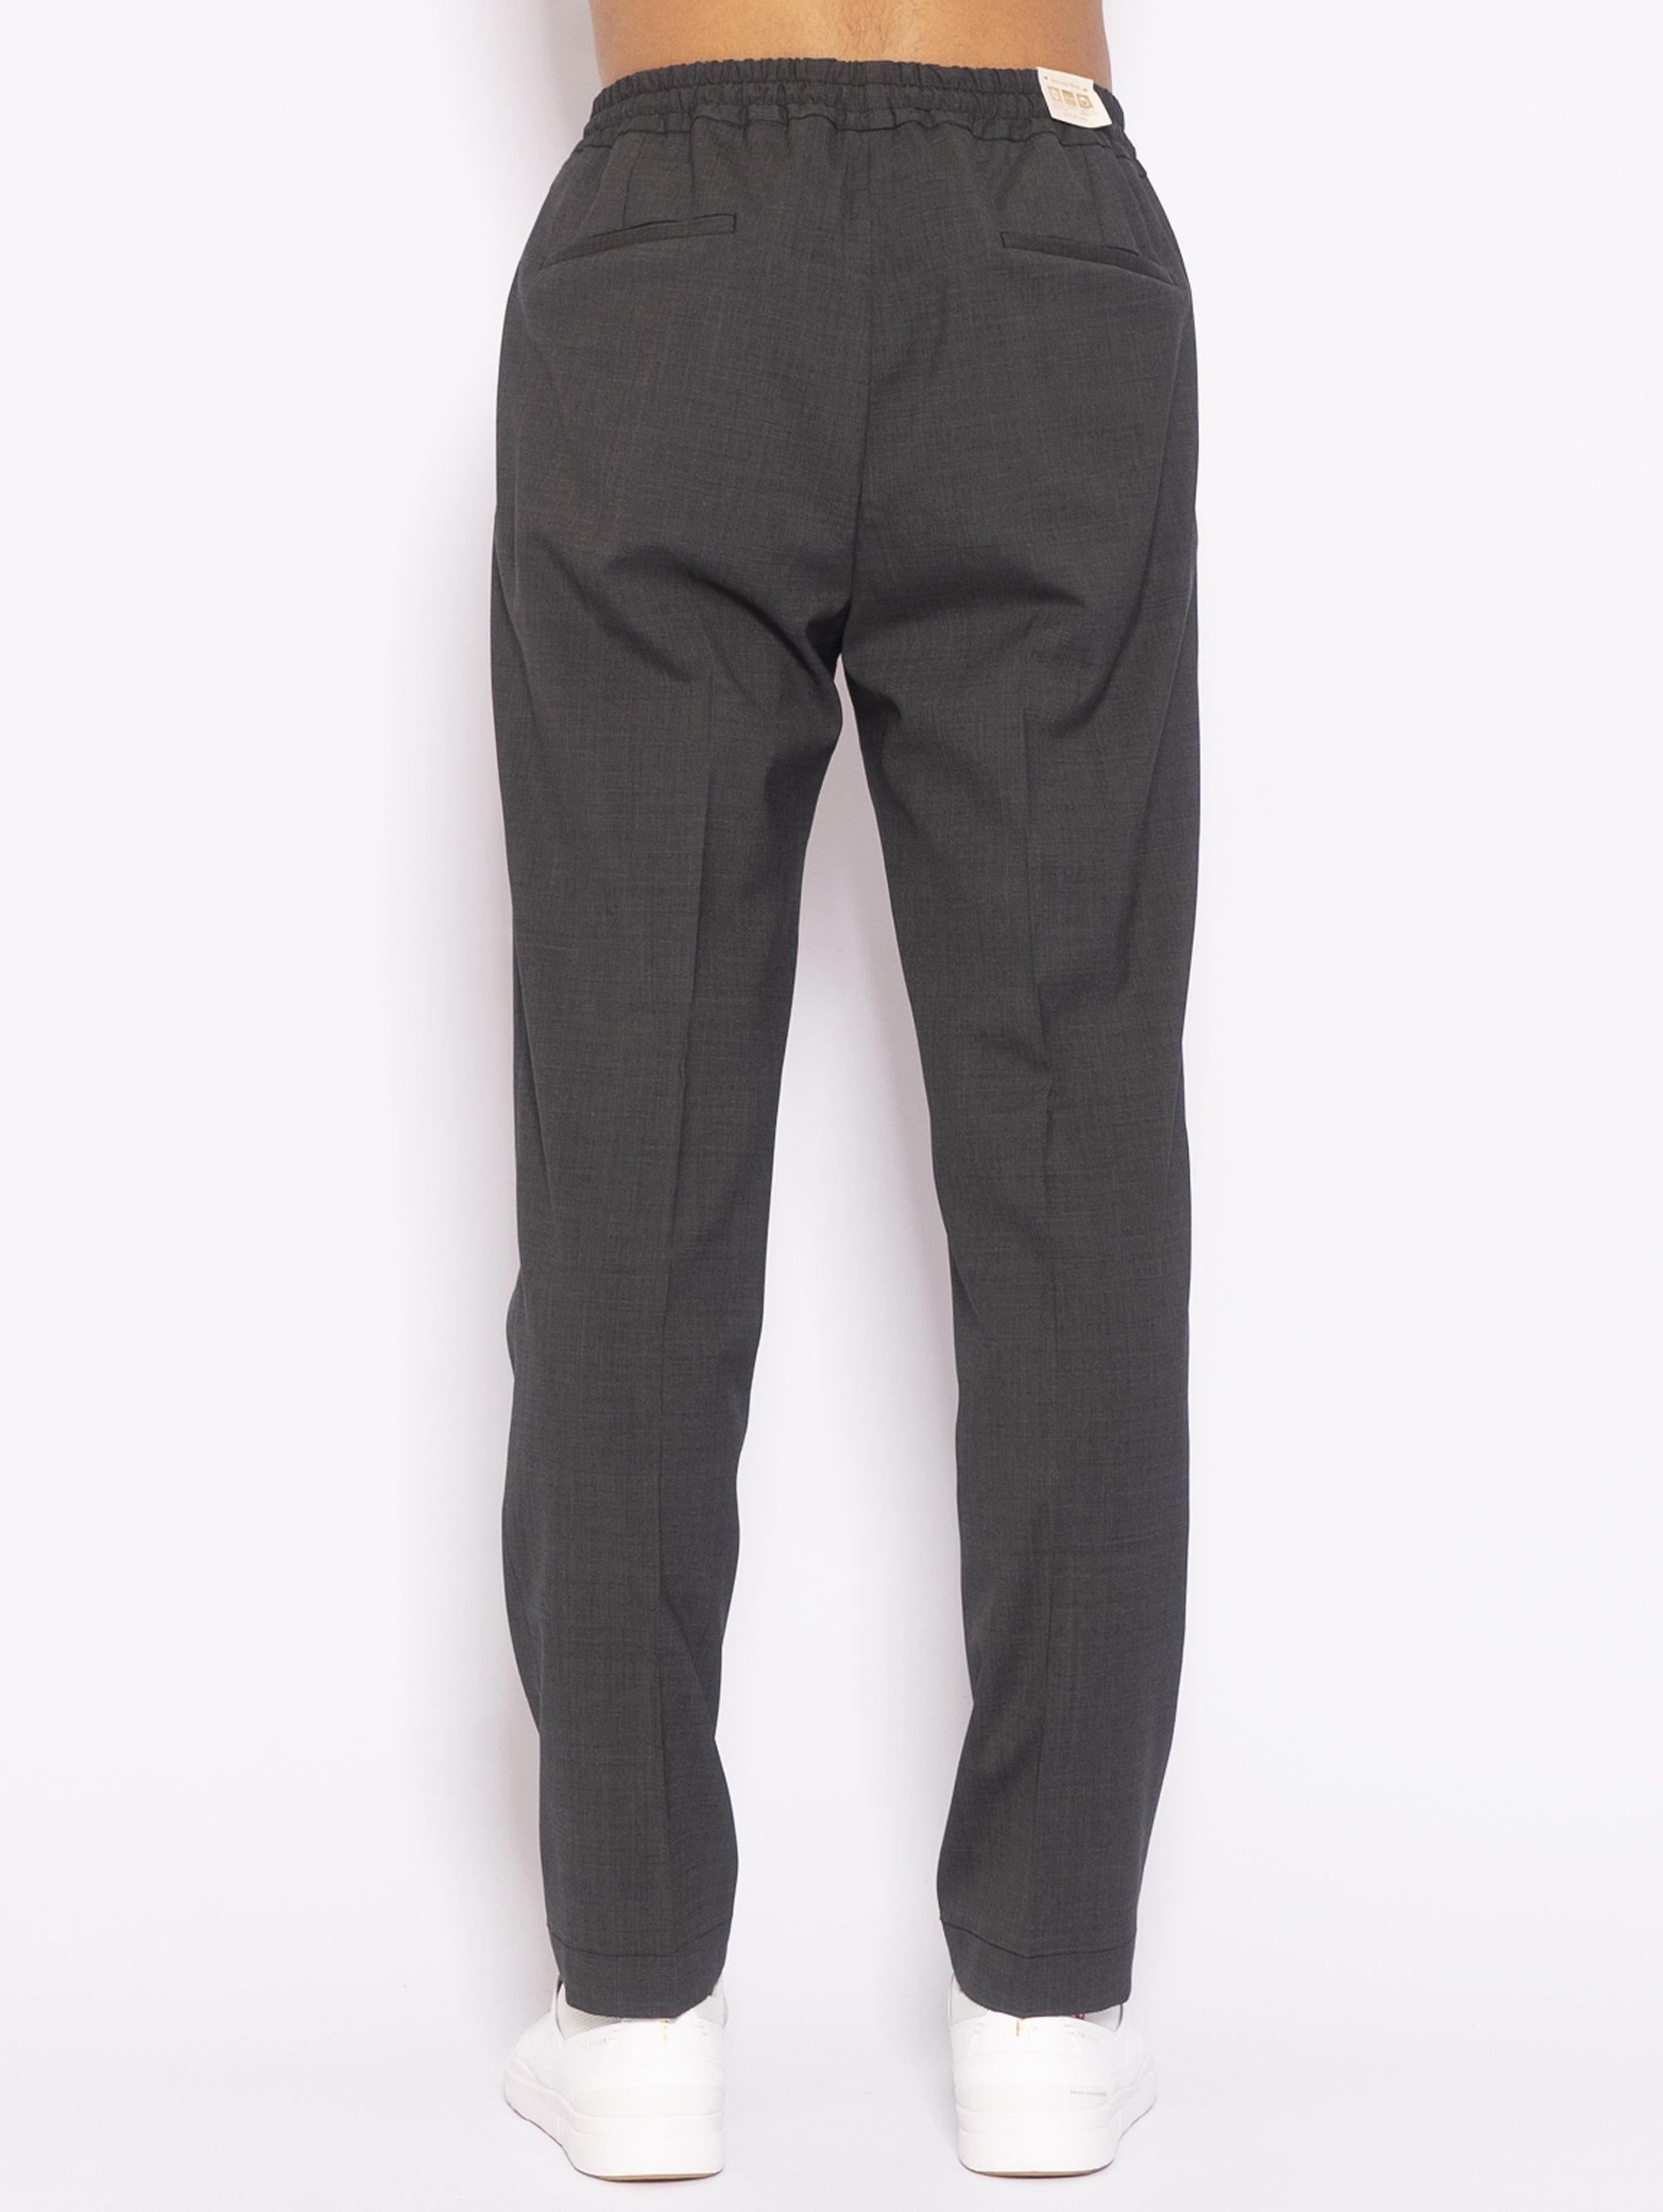 Pants with Gray Drawstring